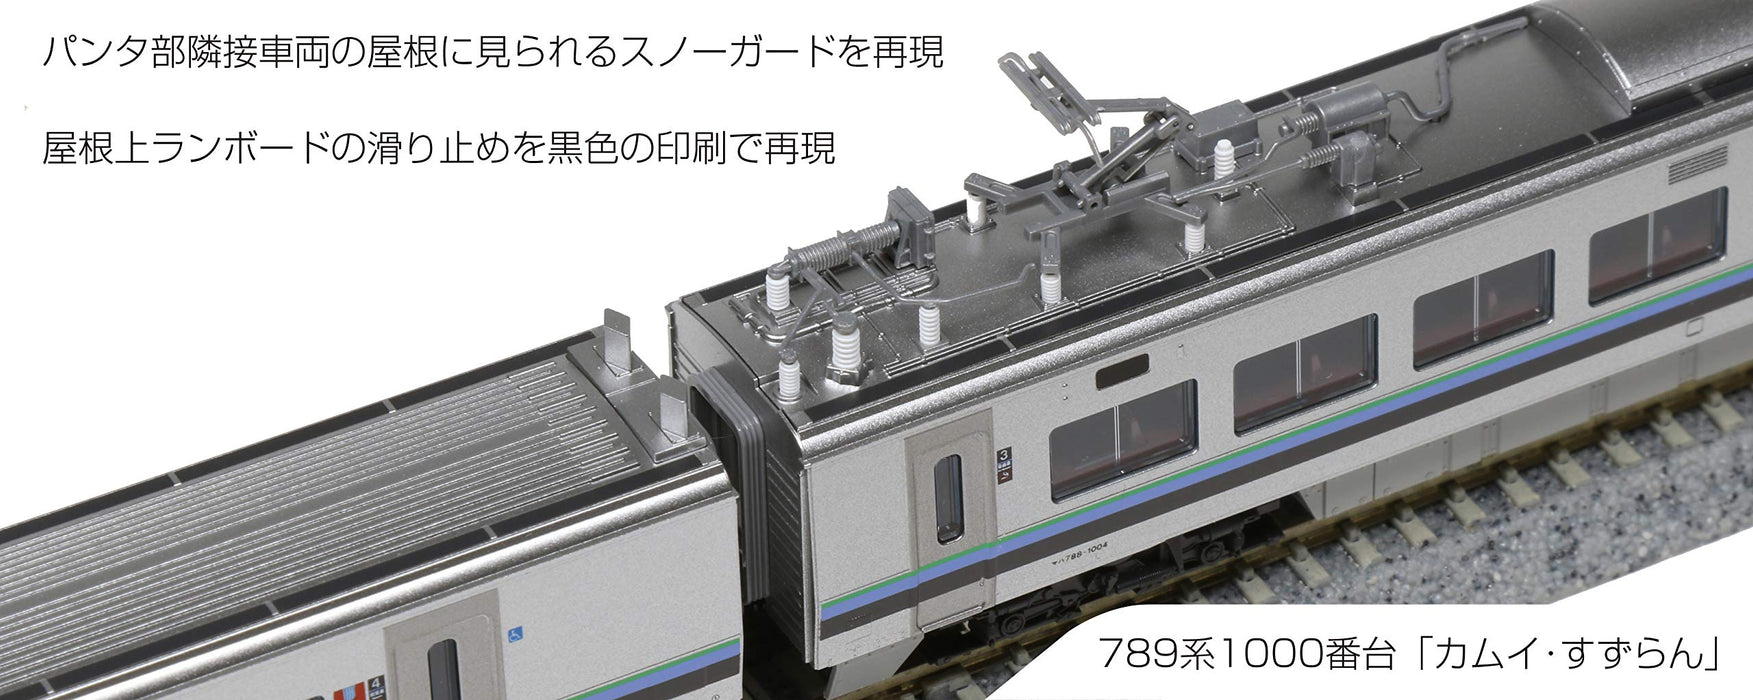 Kato N Gauge 789 Series 1000 Kamuy Suzuran 5-Car Set Model Train 10-1210